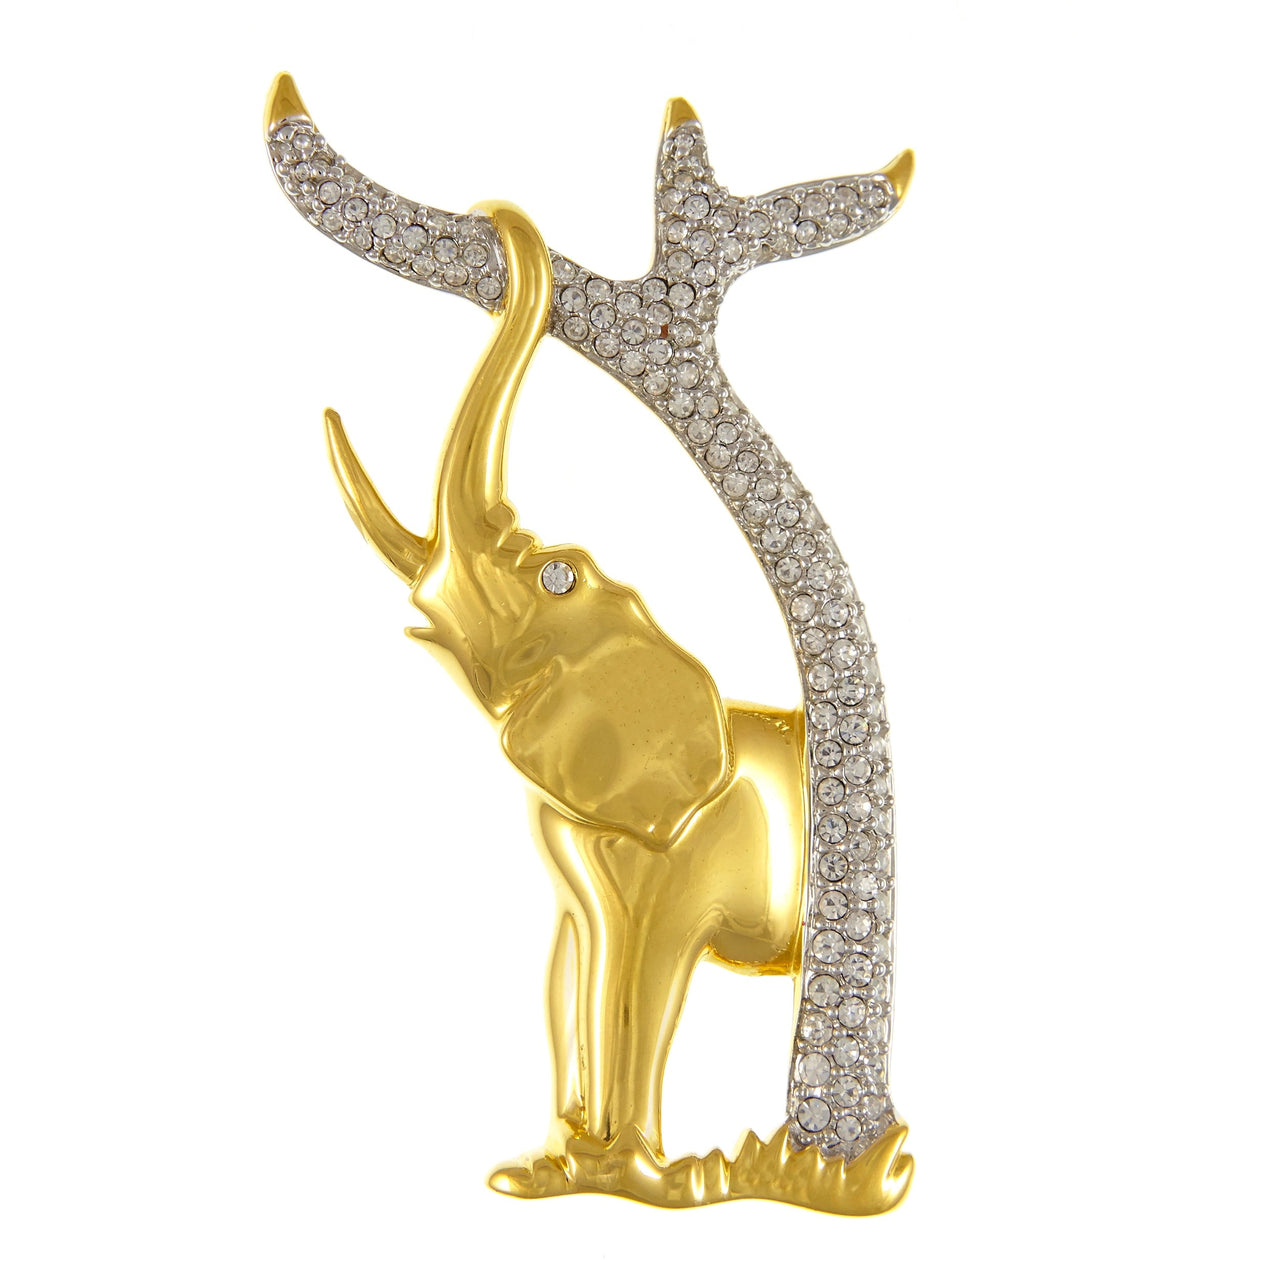 Swarovski Crystal and gold plated Elephant Brooch